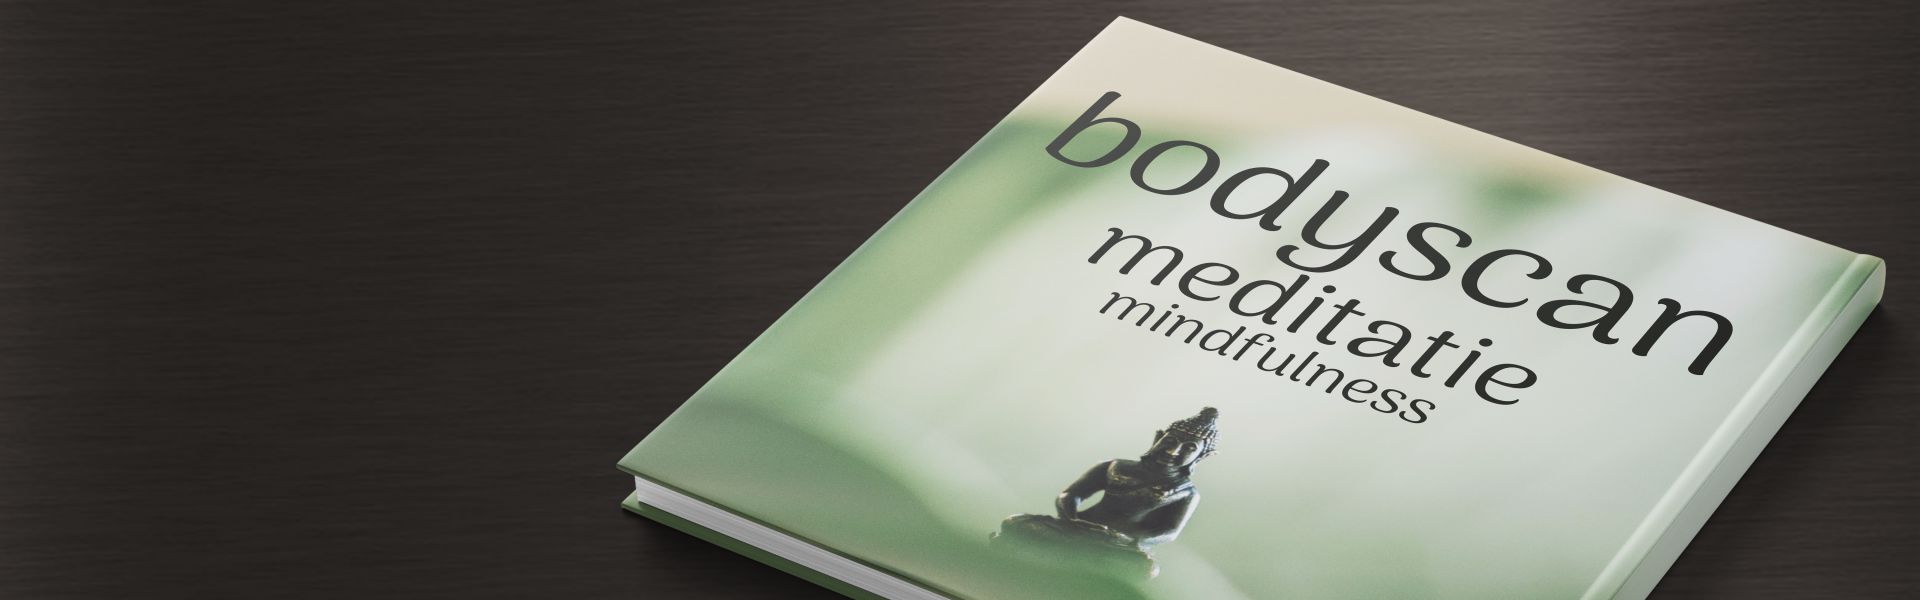 Bodyscan: Mindfulness Meditatie